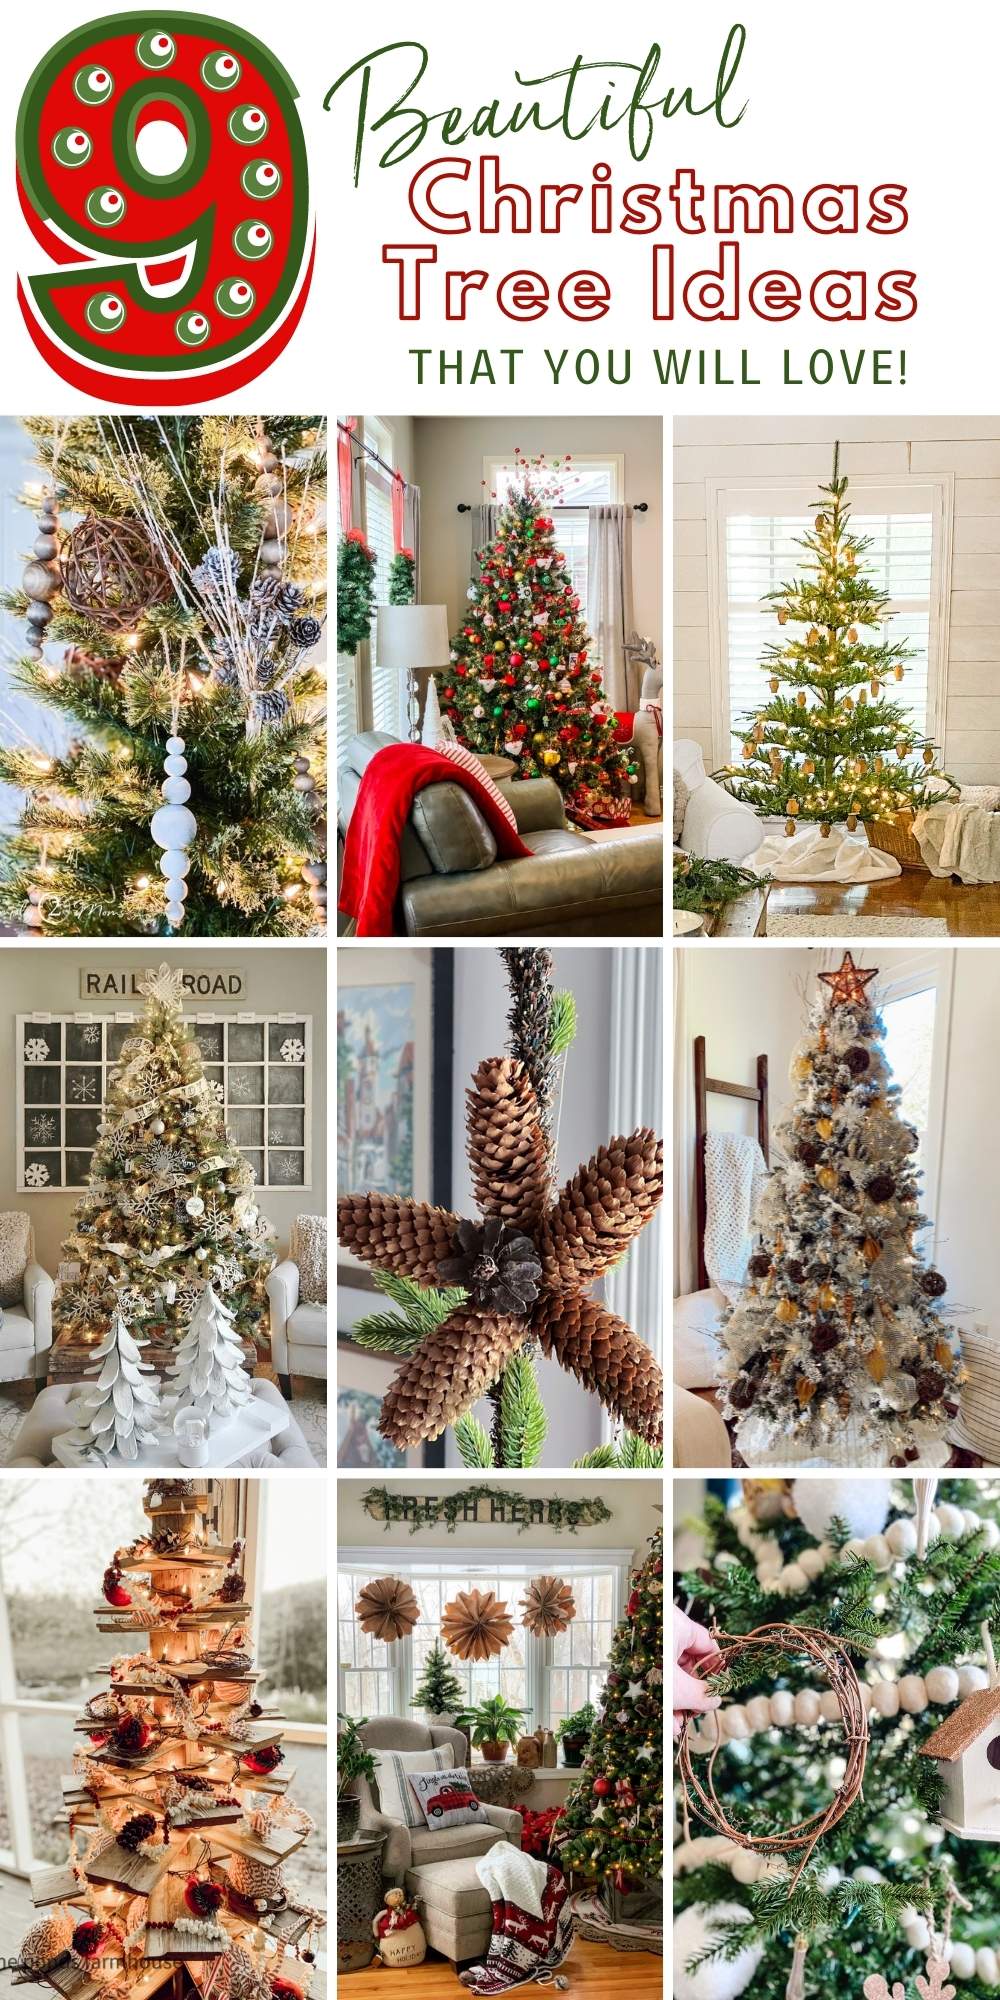 9 Christmas Tree Decor Ideas for an Extra Festive Holiday